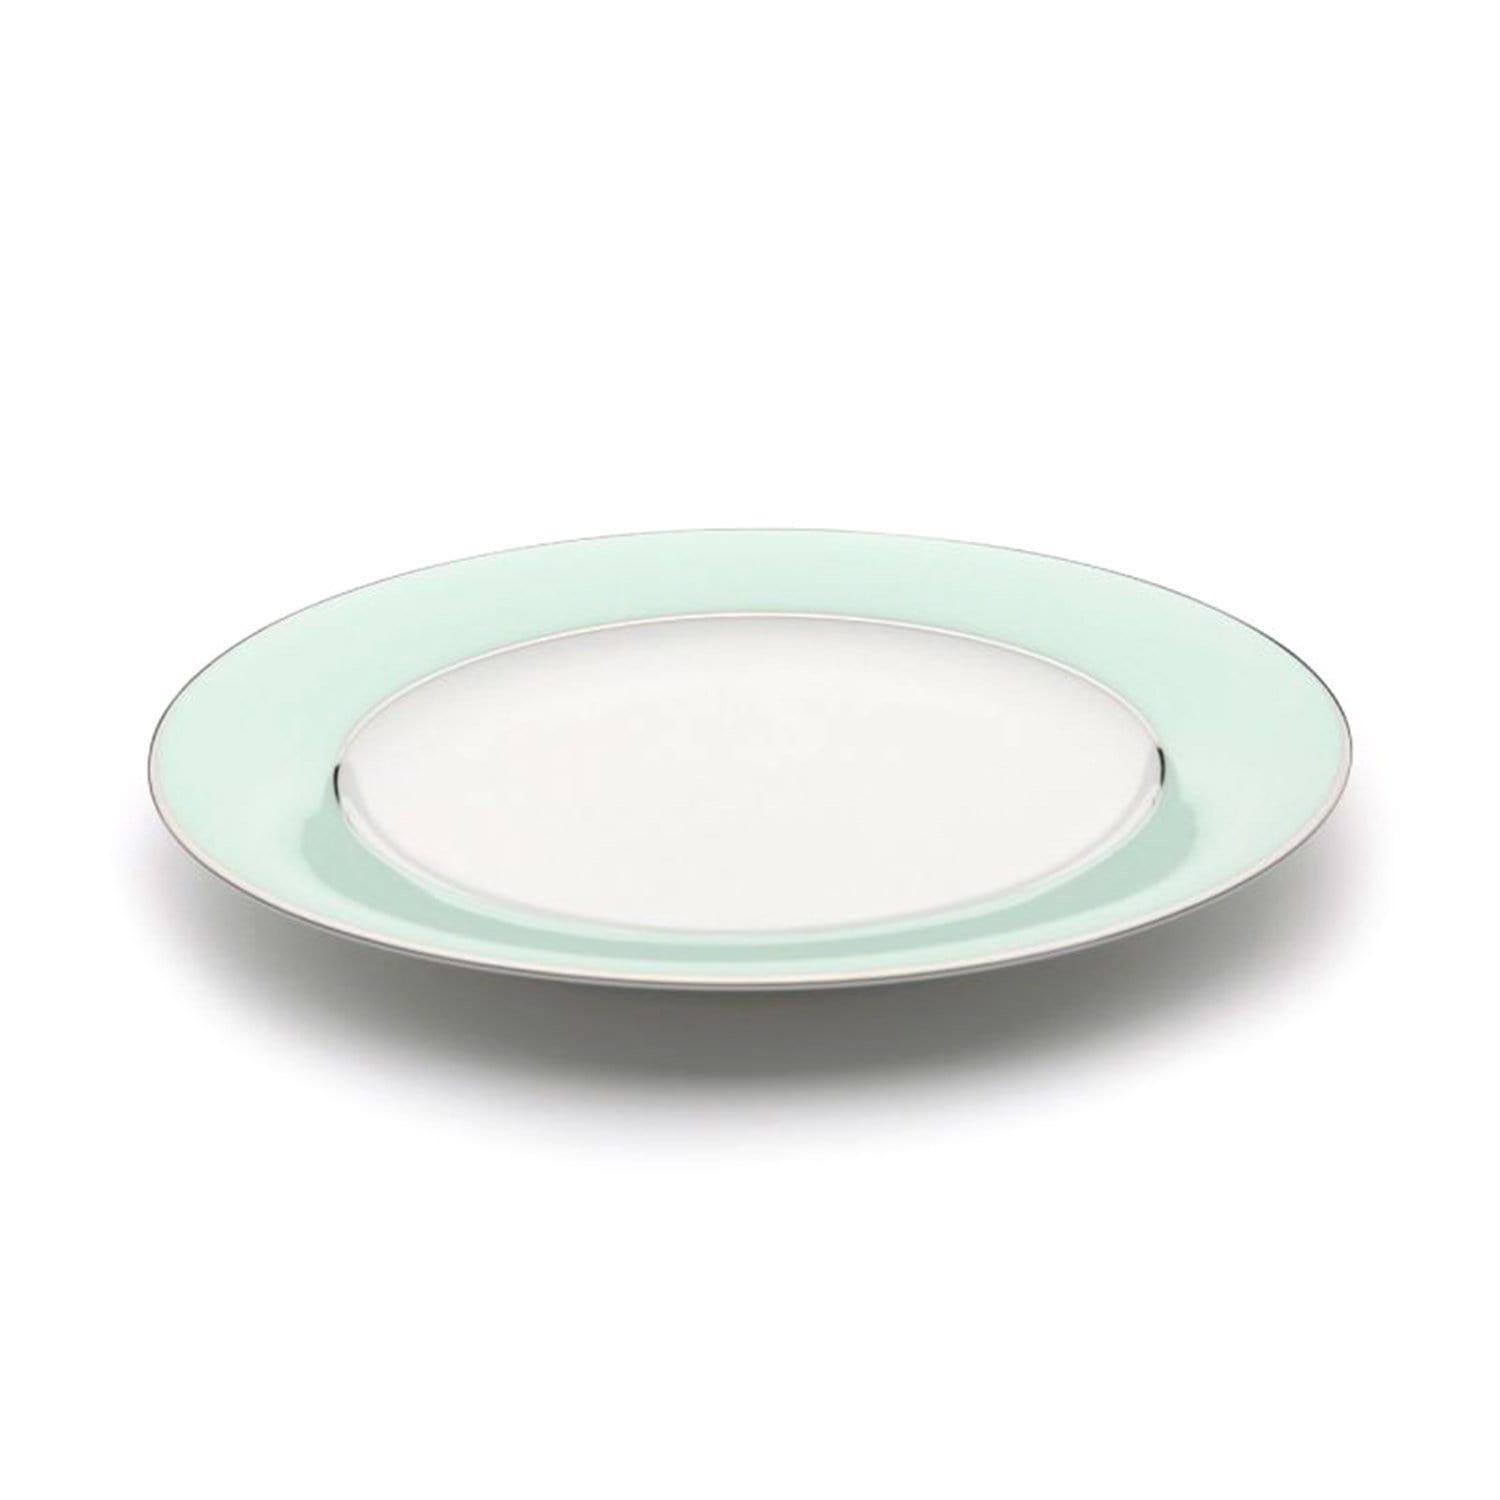 Dankotuwa Meldy Green Salad Plate - White and Green - MELDYG-0511 - Jashanmal Home